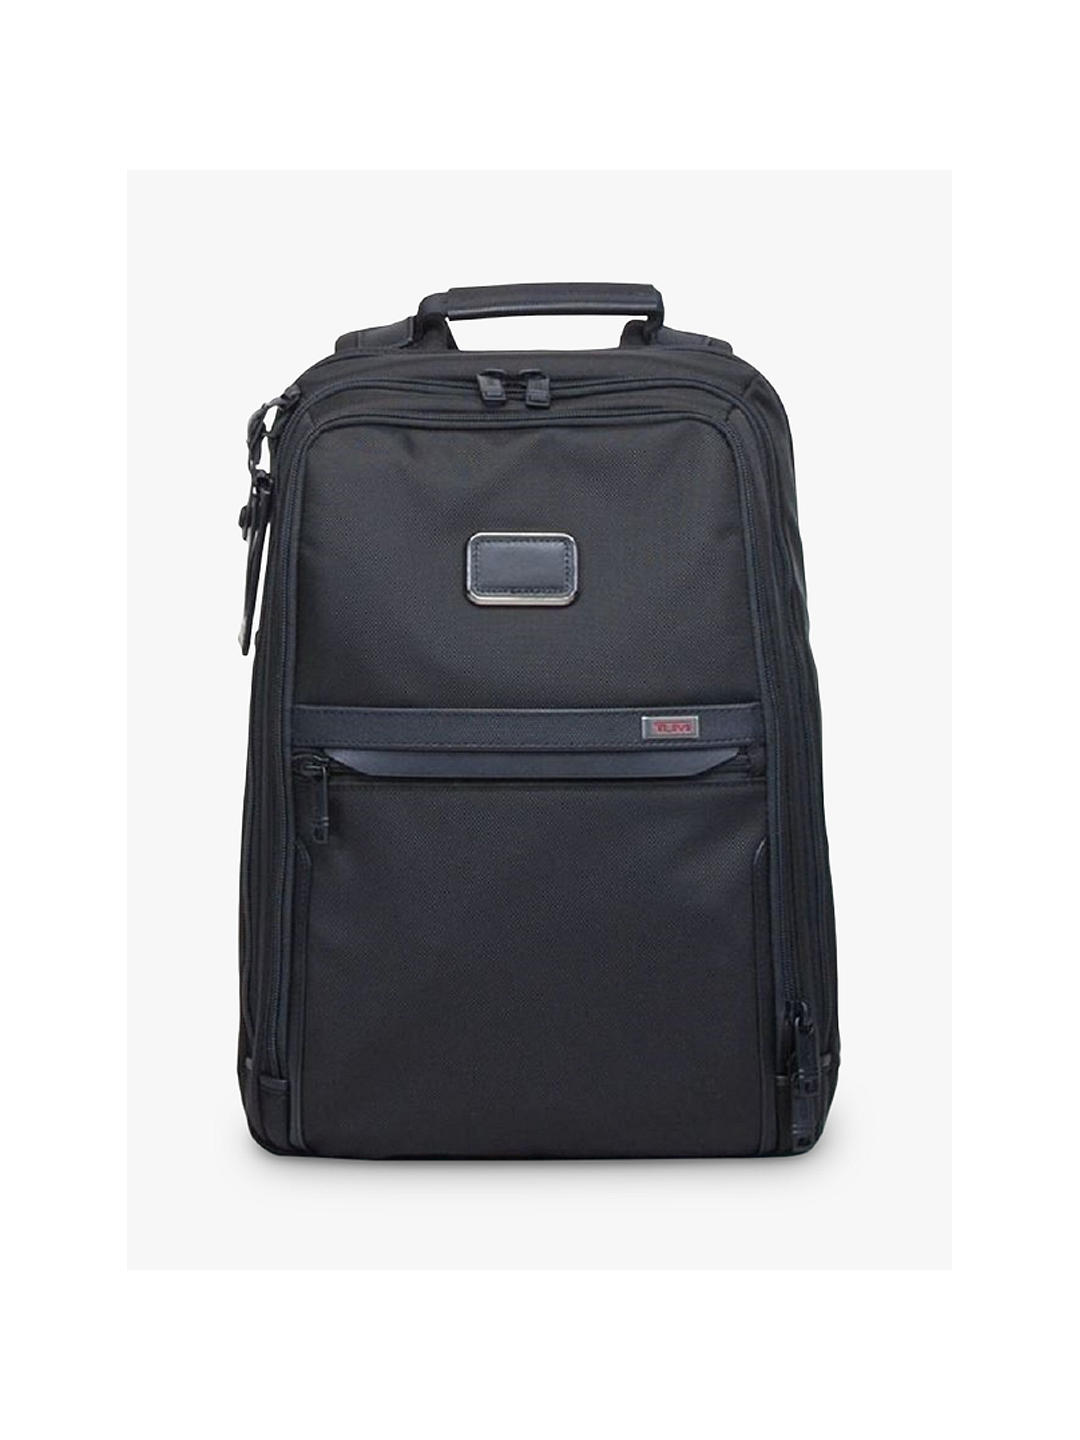 TUMI Alpha 3 Slim Backpack, Black